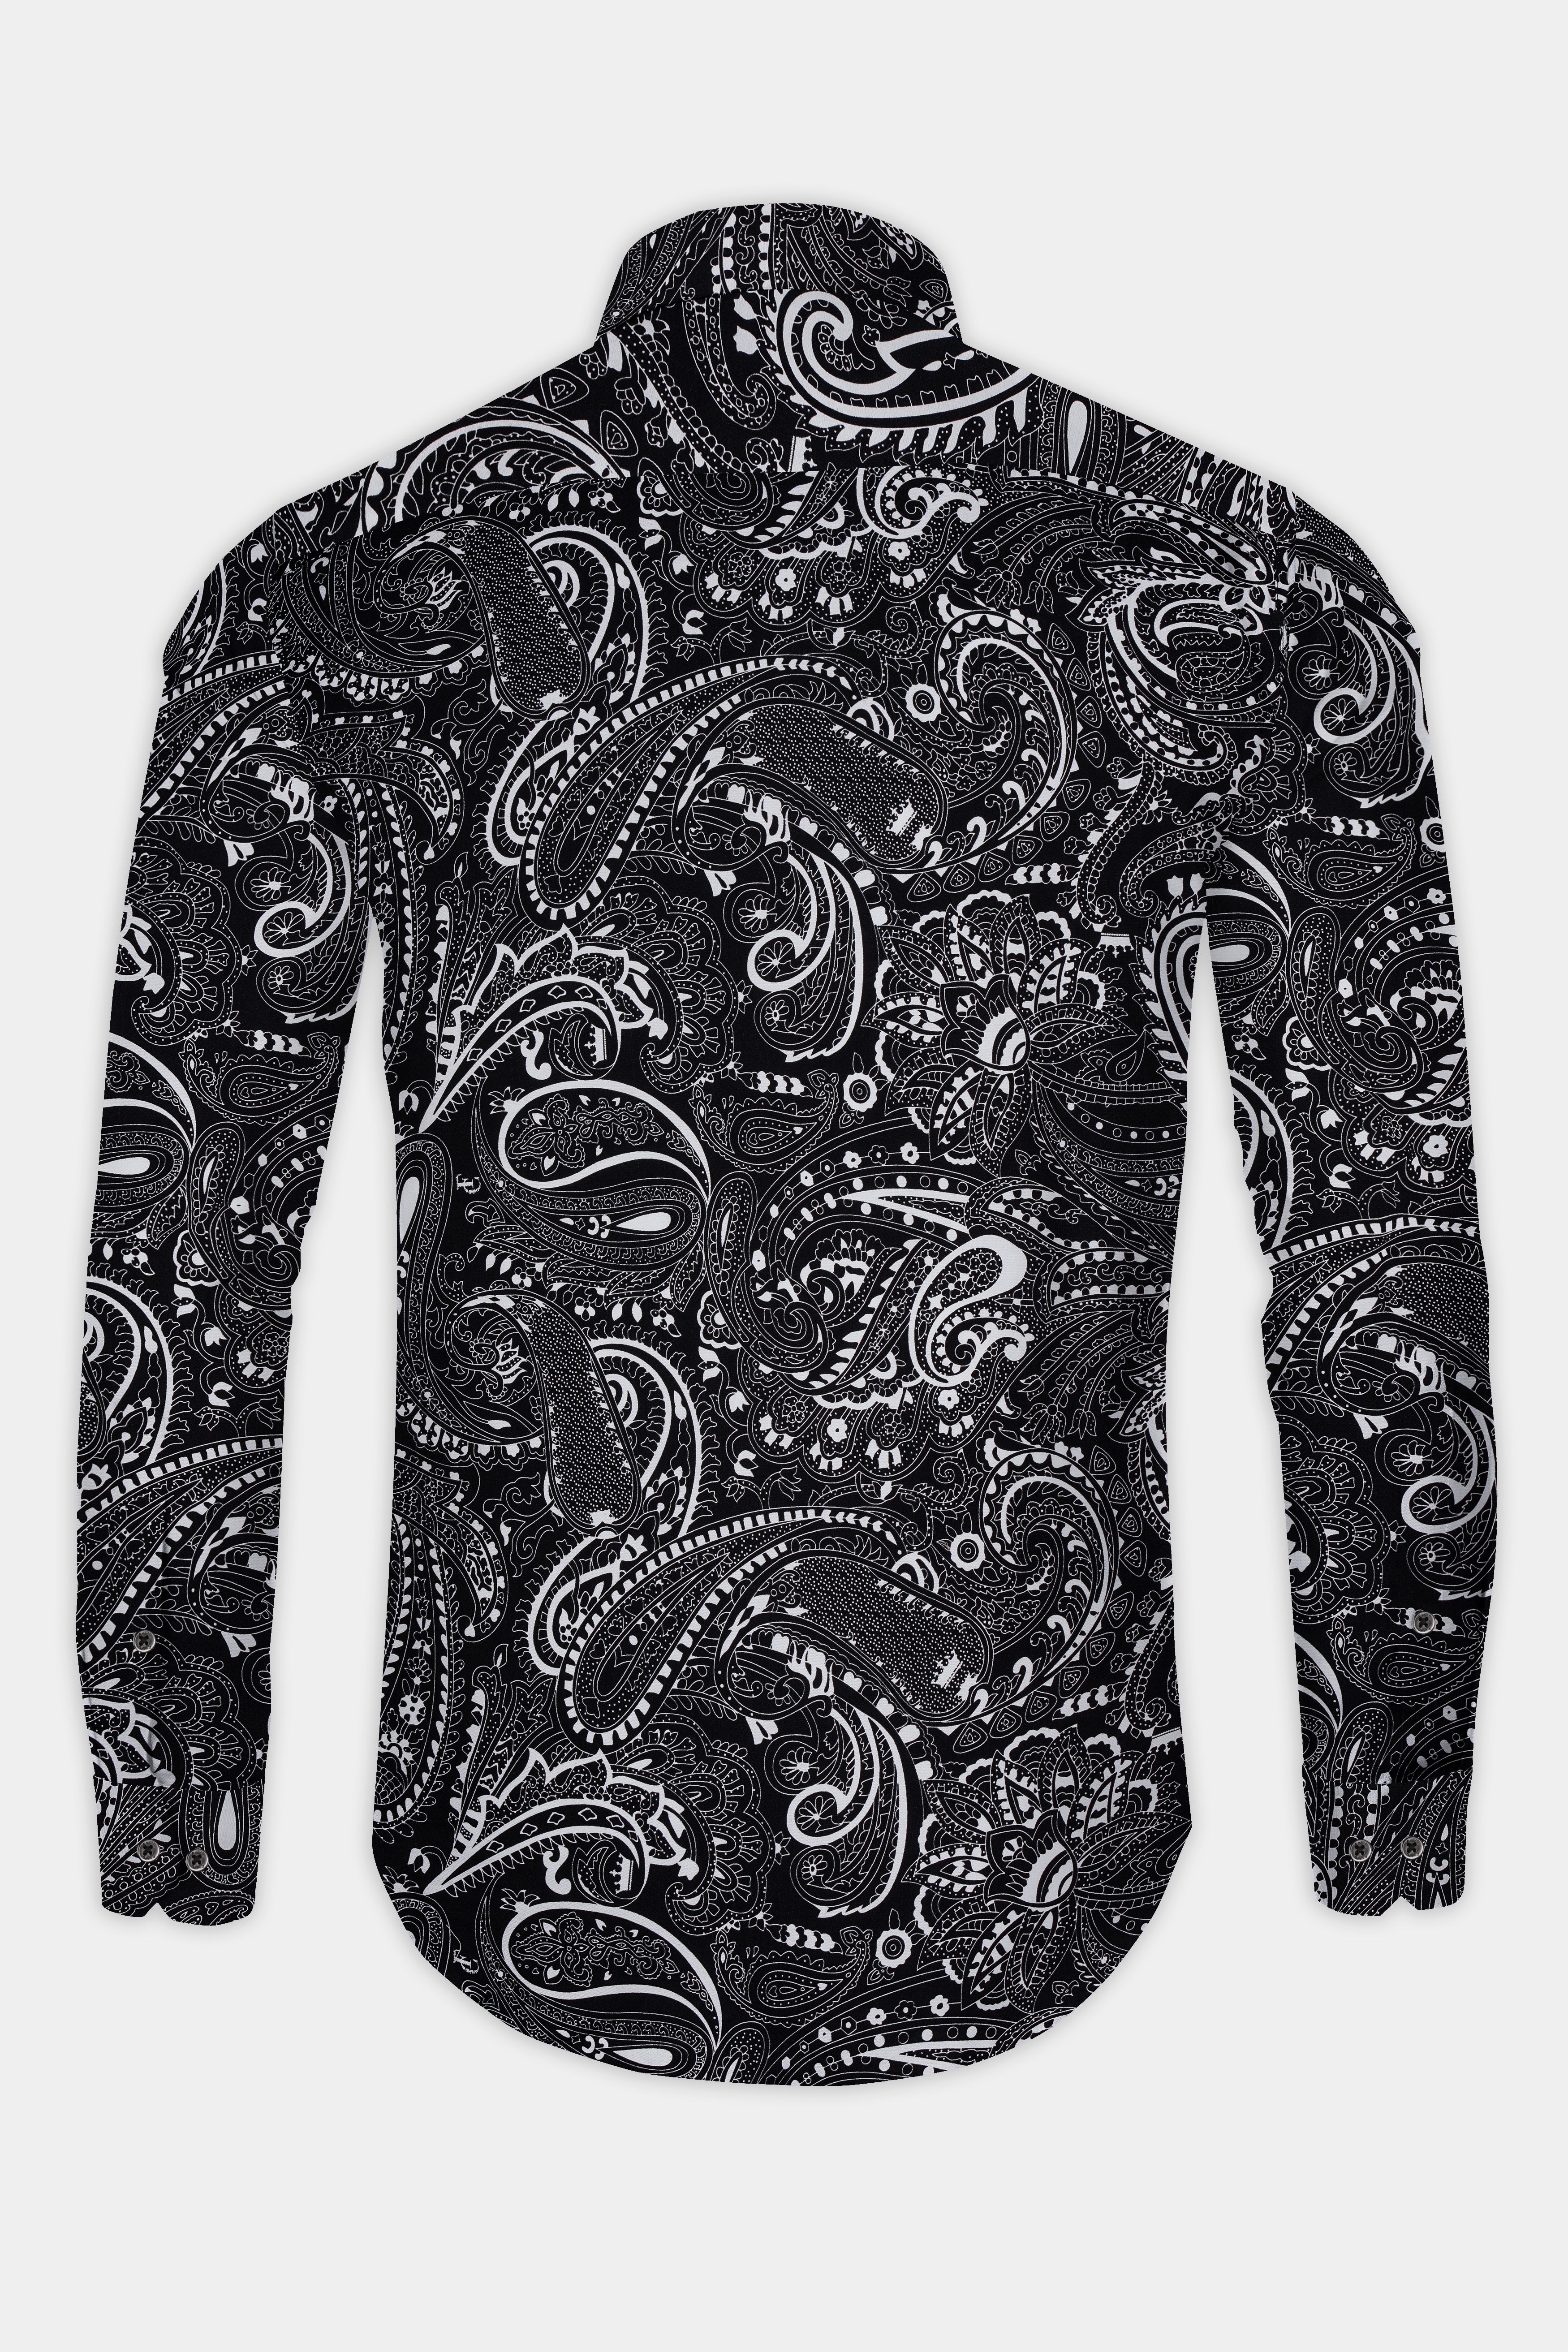 Jade Black Paisley Printed Super Soft Premium Cotton Shirt